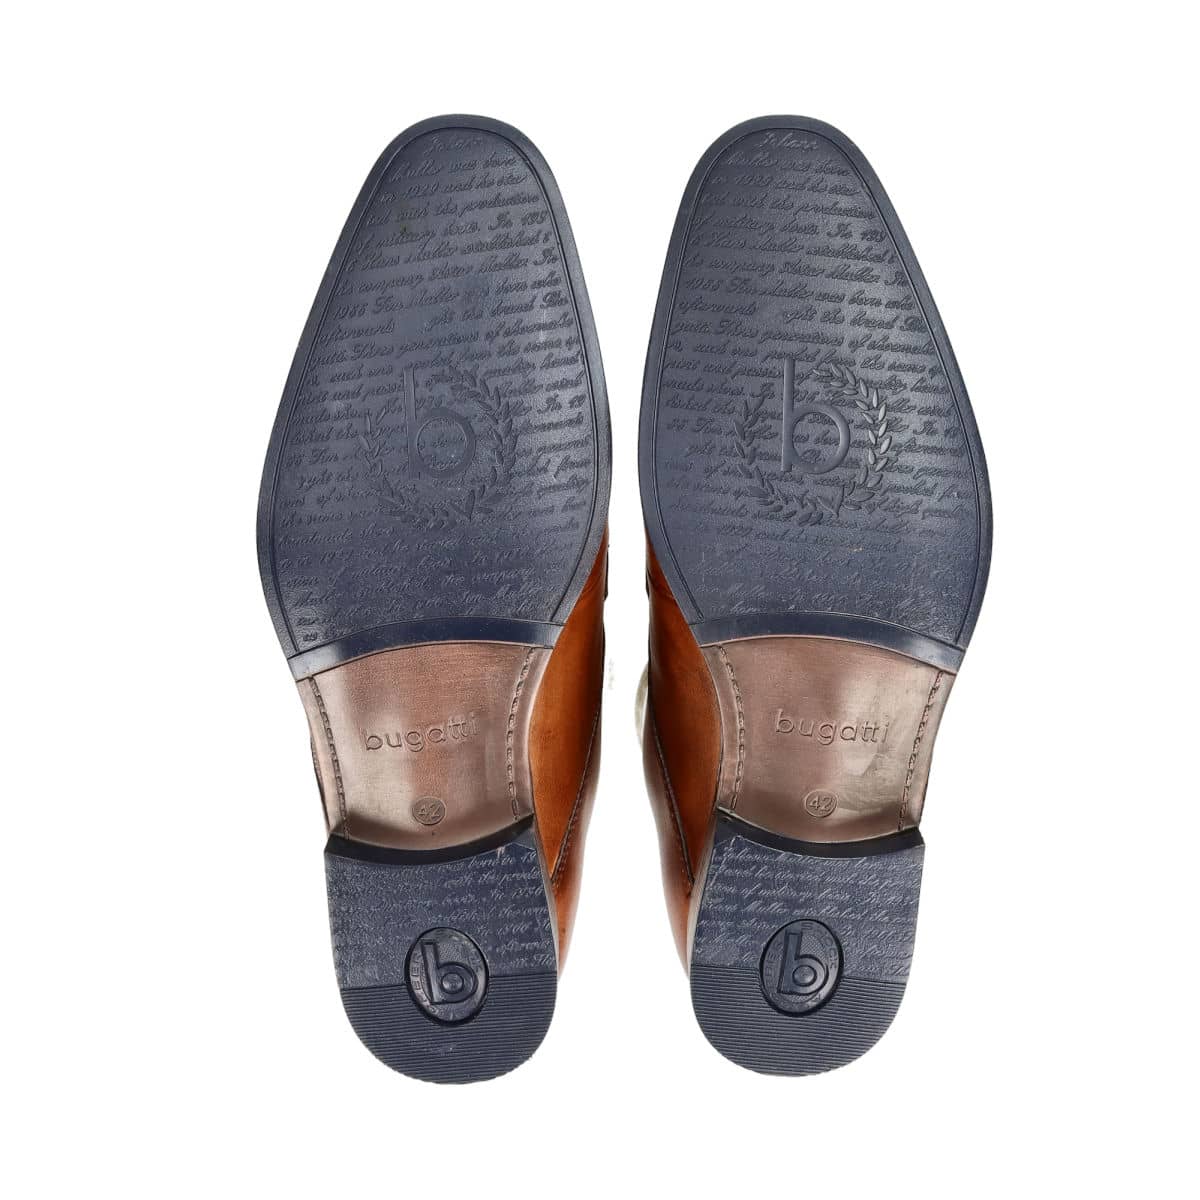 Bugatti men\'s leather shoes brown formal - cognac